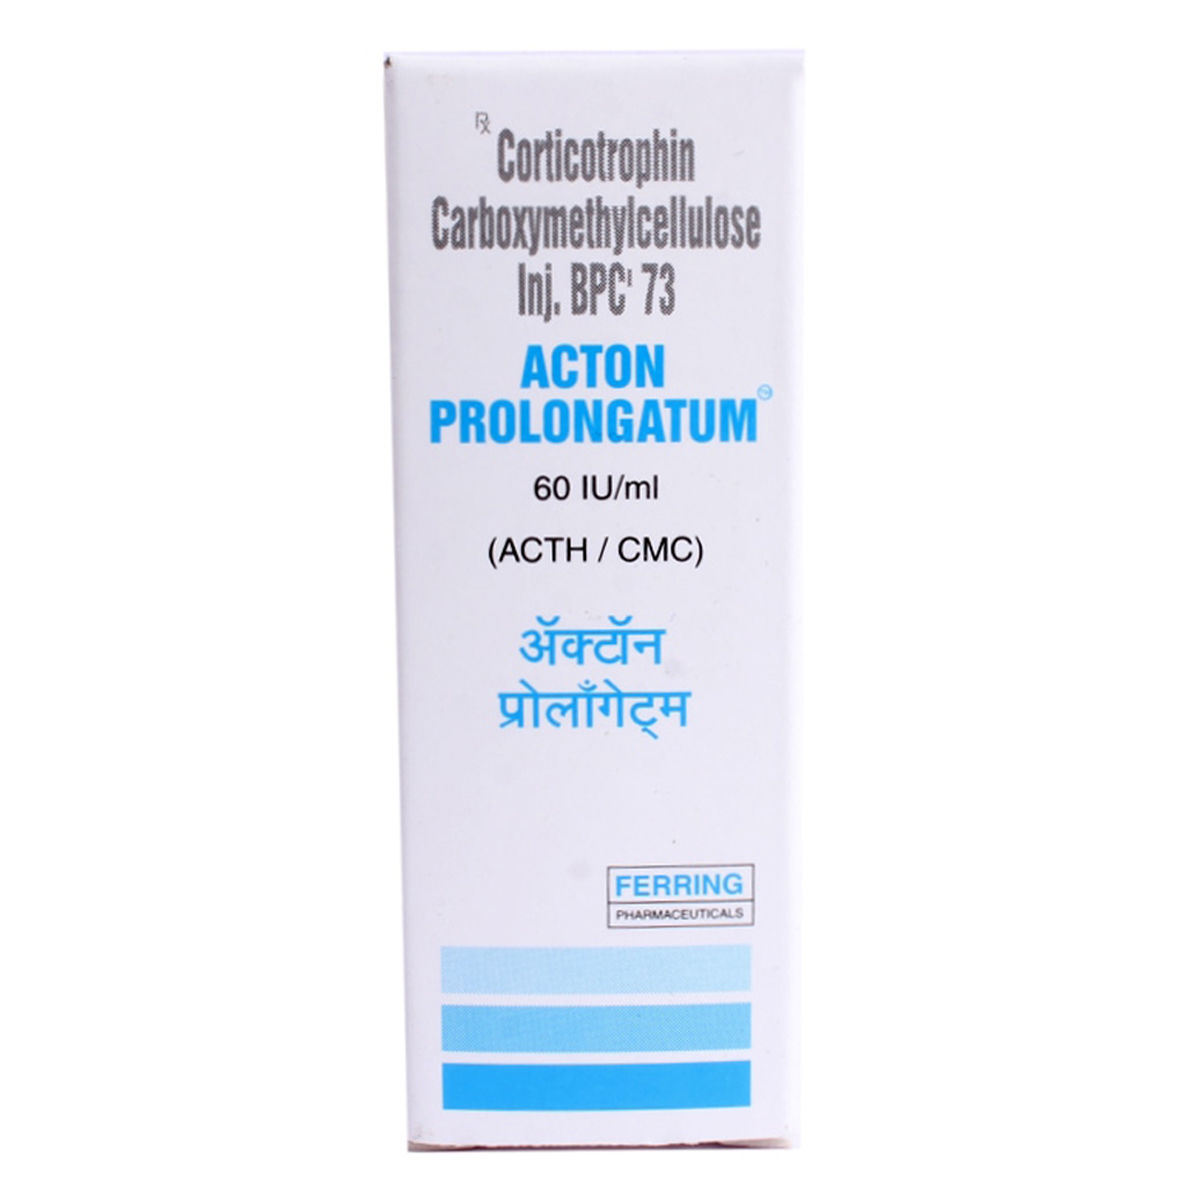 Buy Acton Prolongatum 60 Iu/ml Injection 5 ml Online